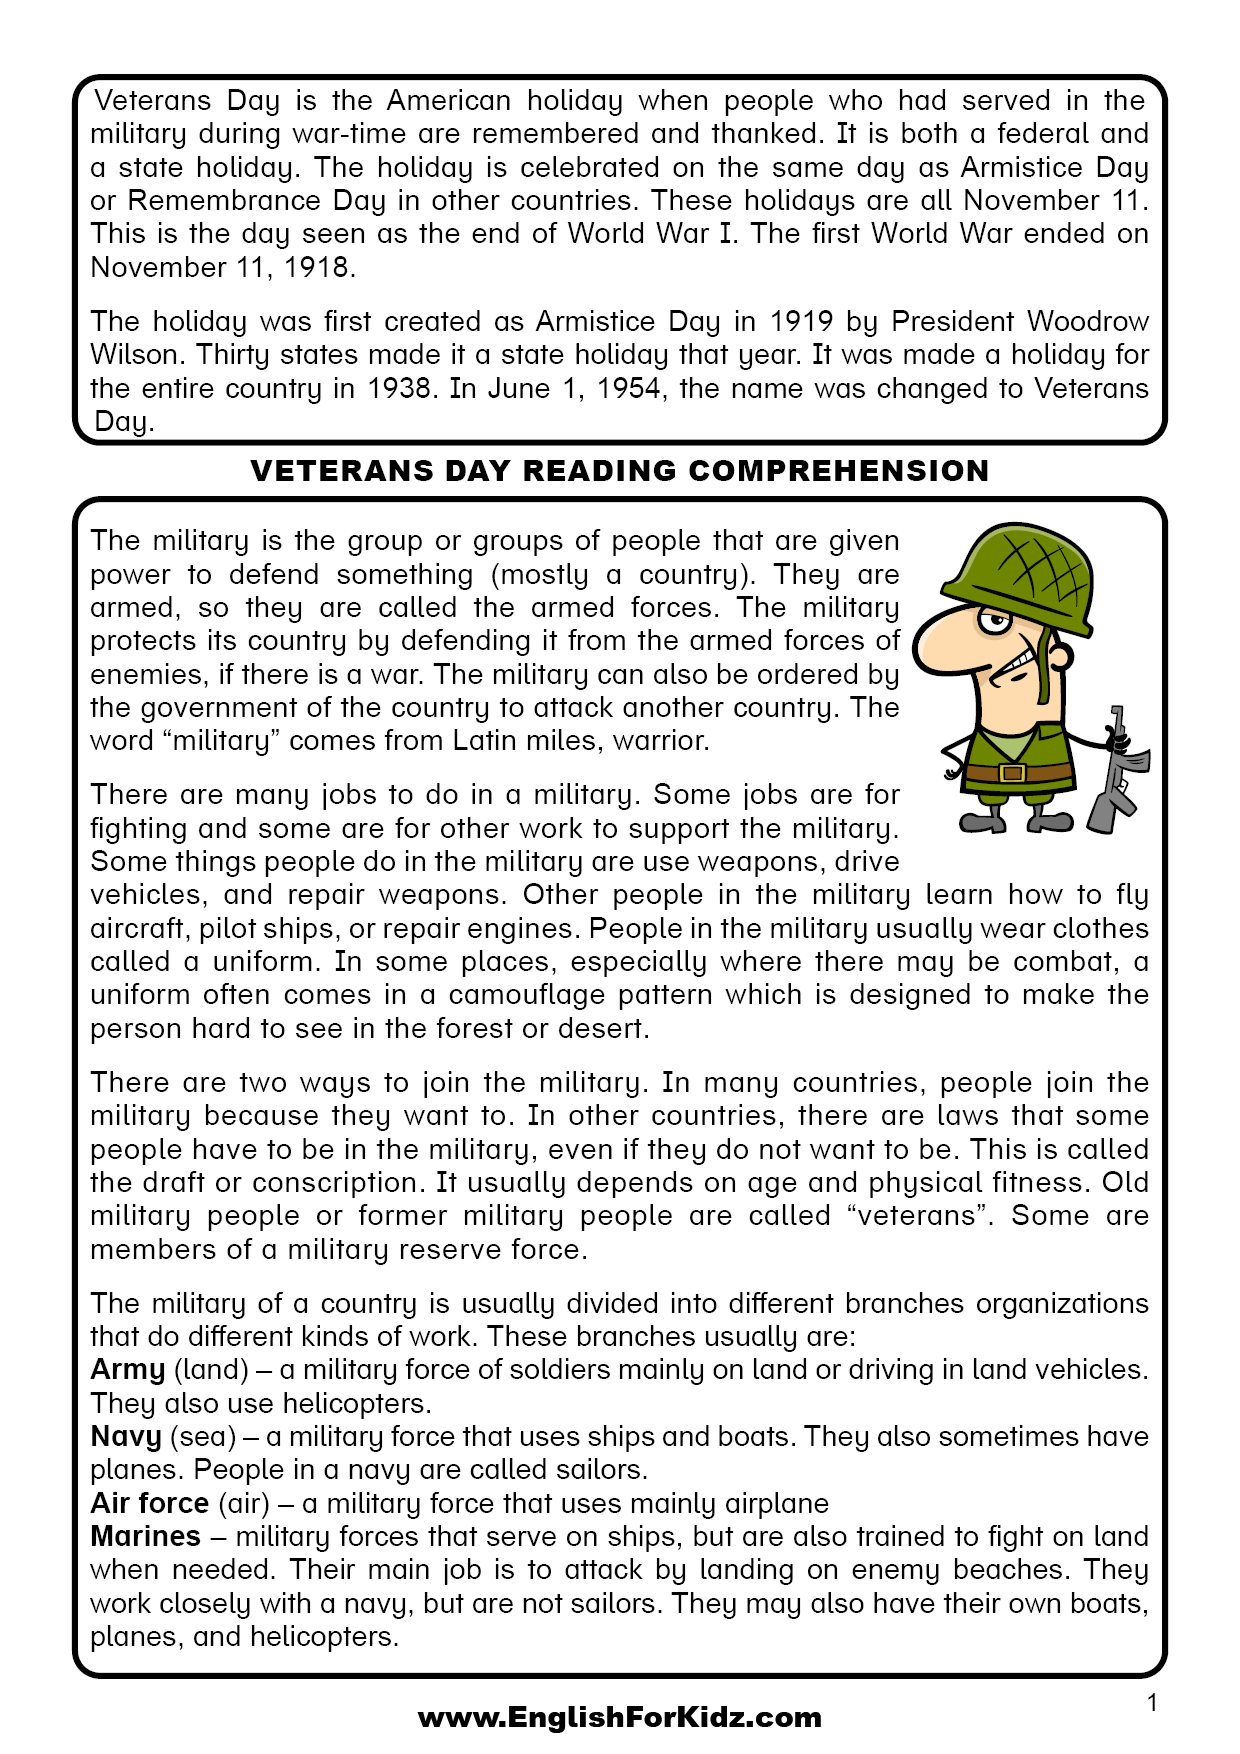 Veterans Day Reading Comprehension Free PDF 